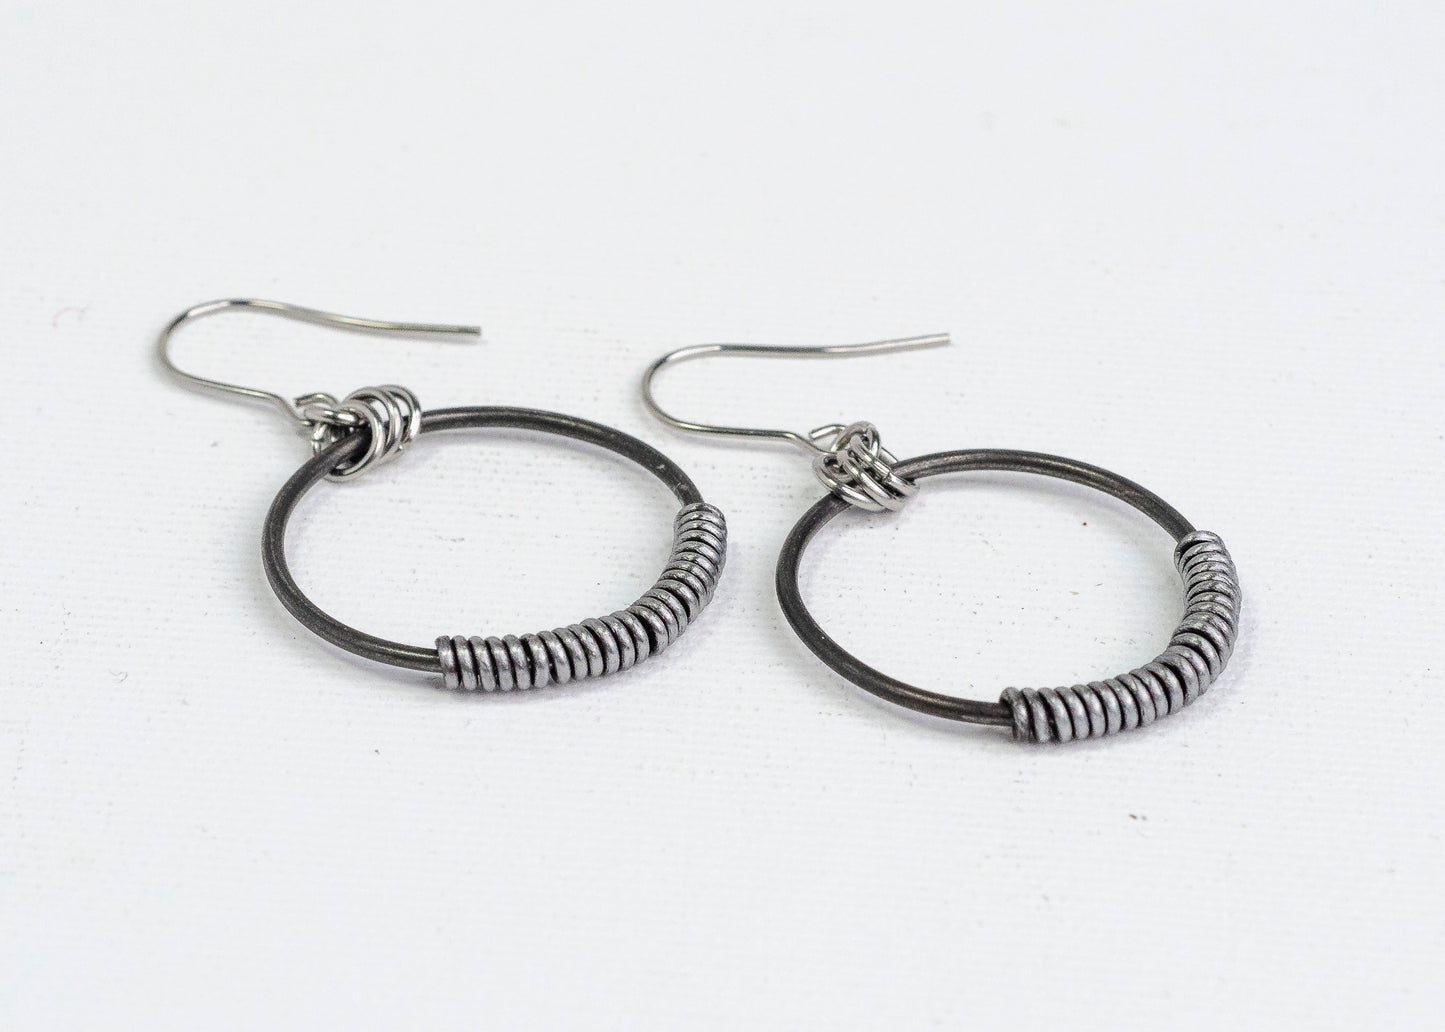 Mercury Concentric Earrings Steel Wrap